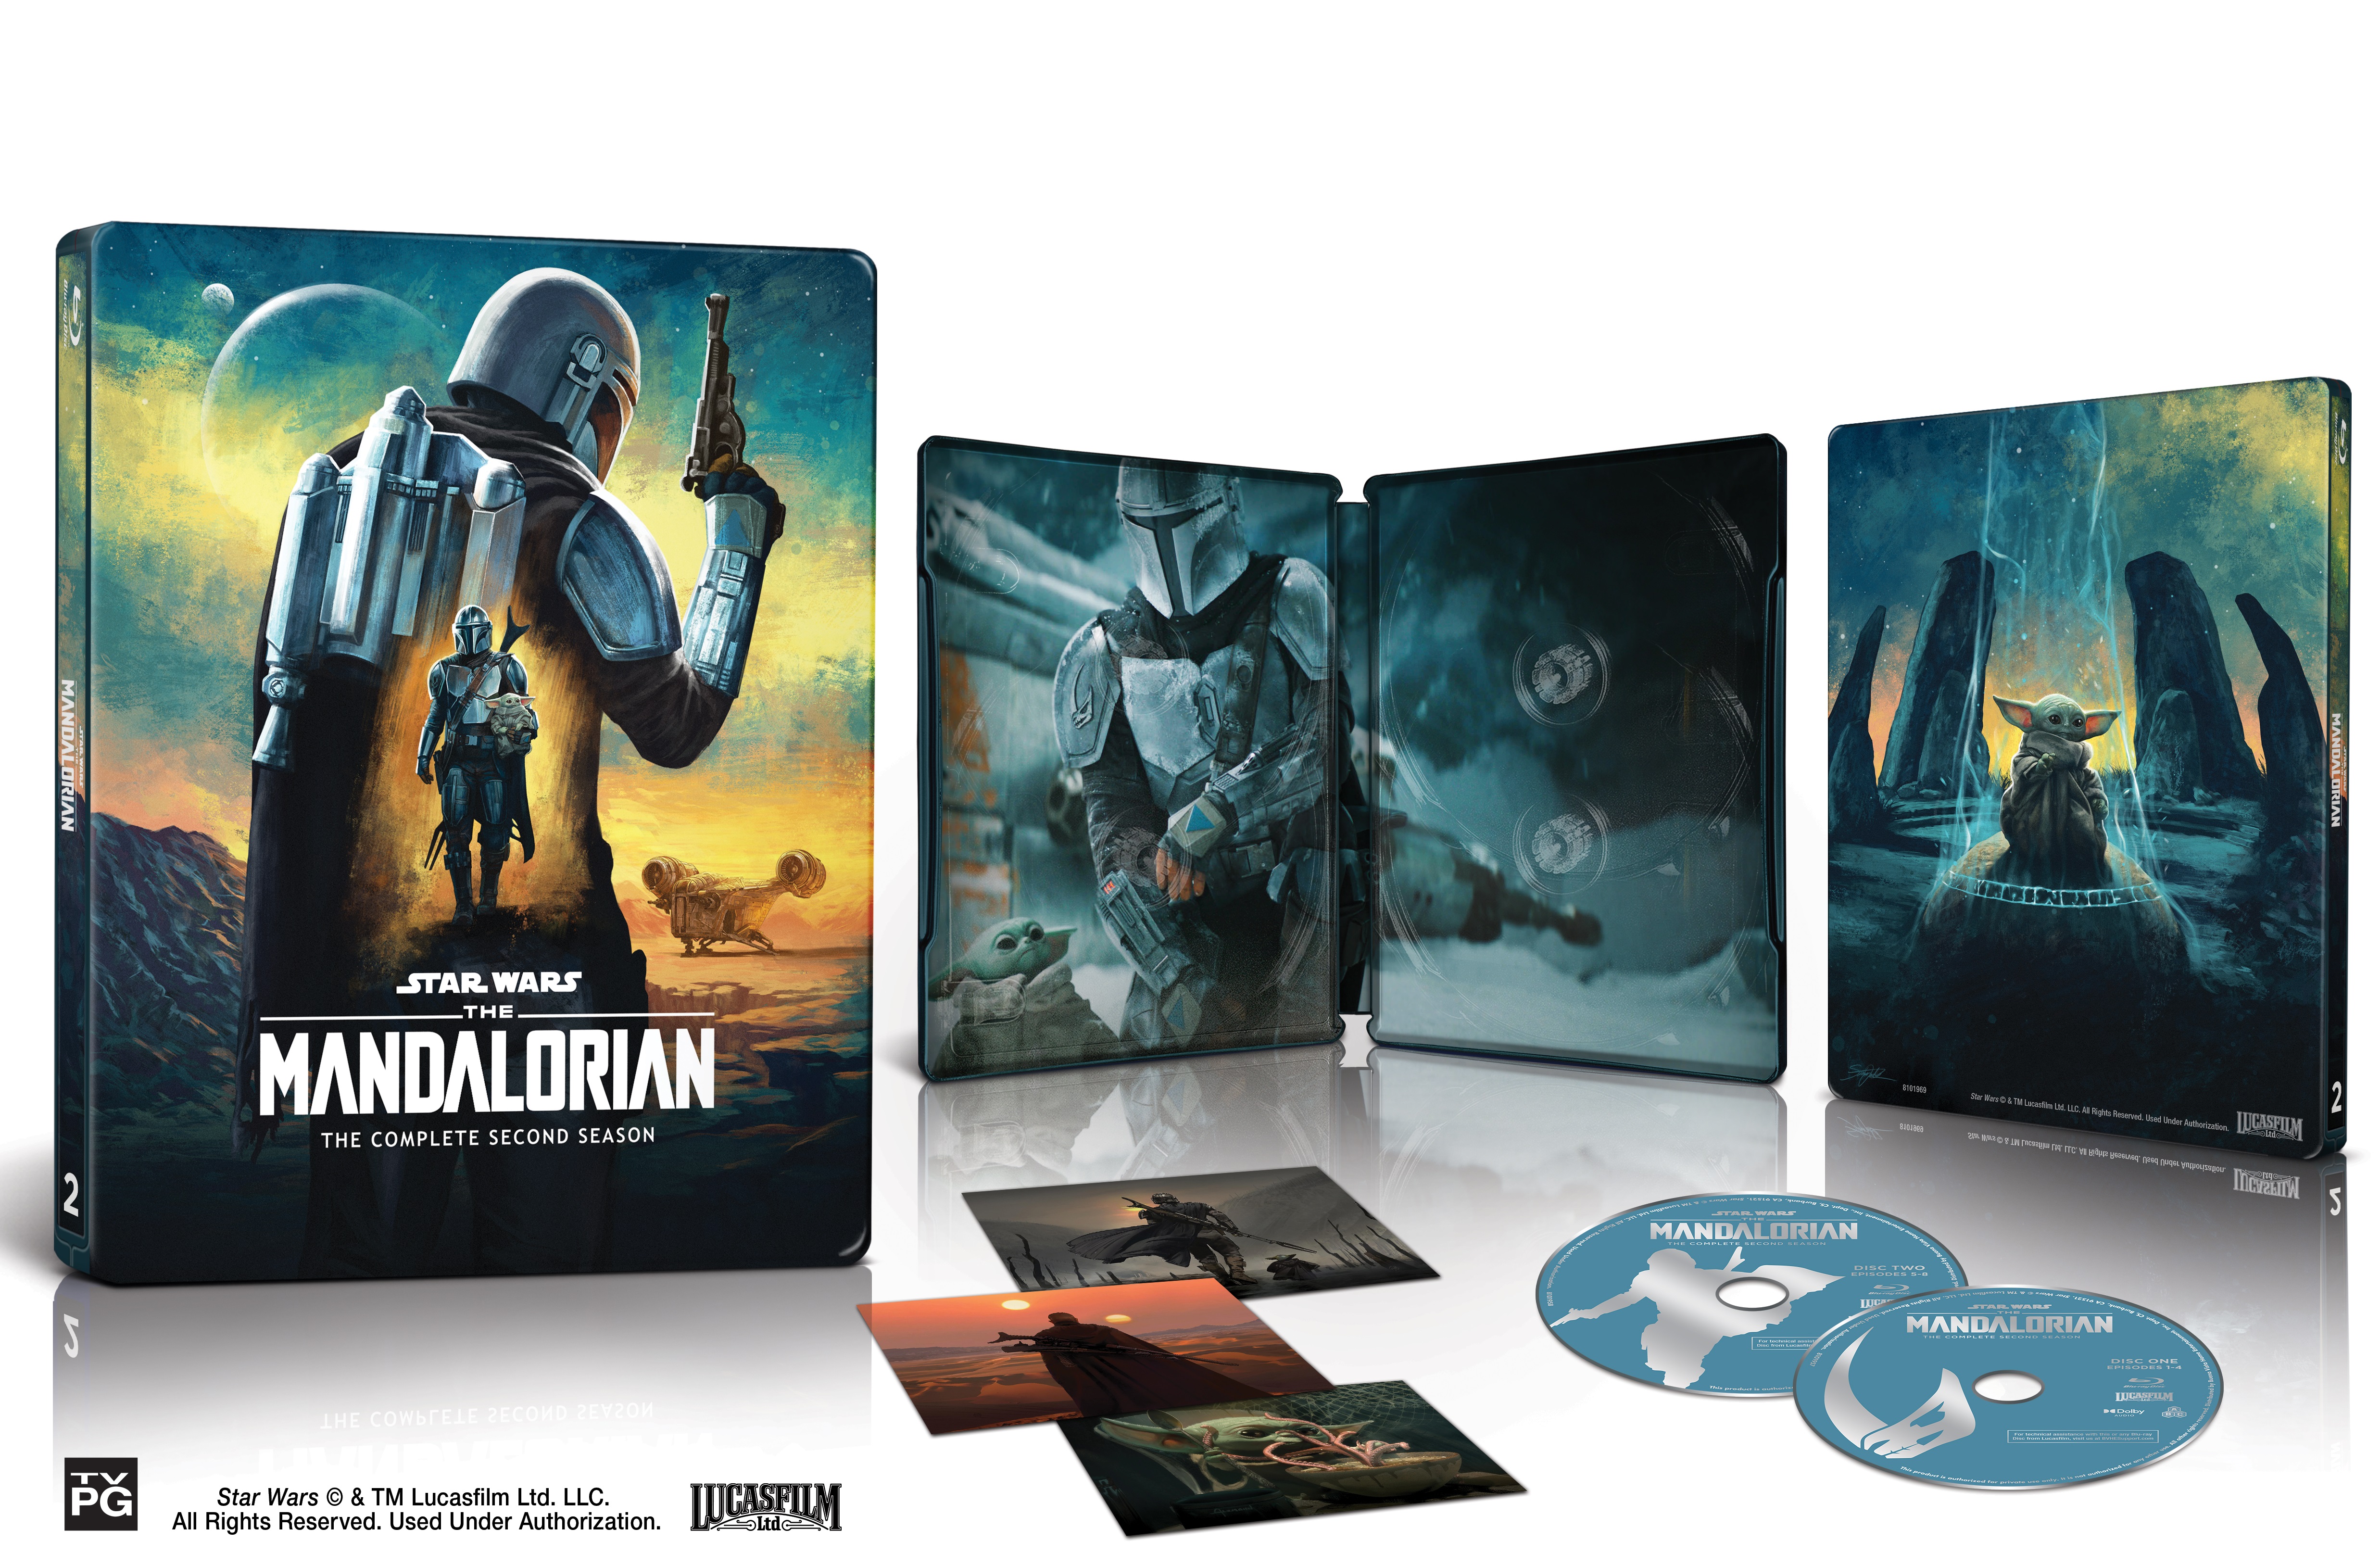 The Mandalorian: The Complete Second Season (Blu-Ray Steelbook) (Disney) - image 2 of 3